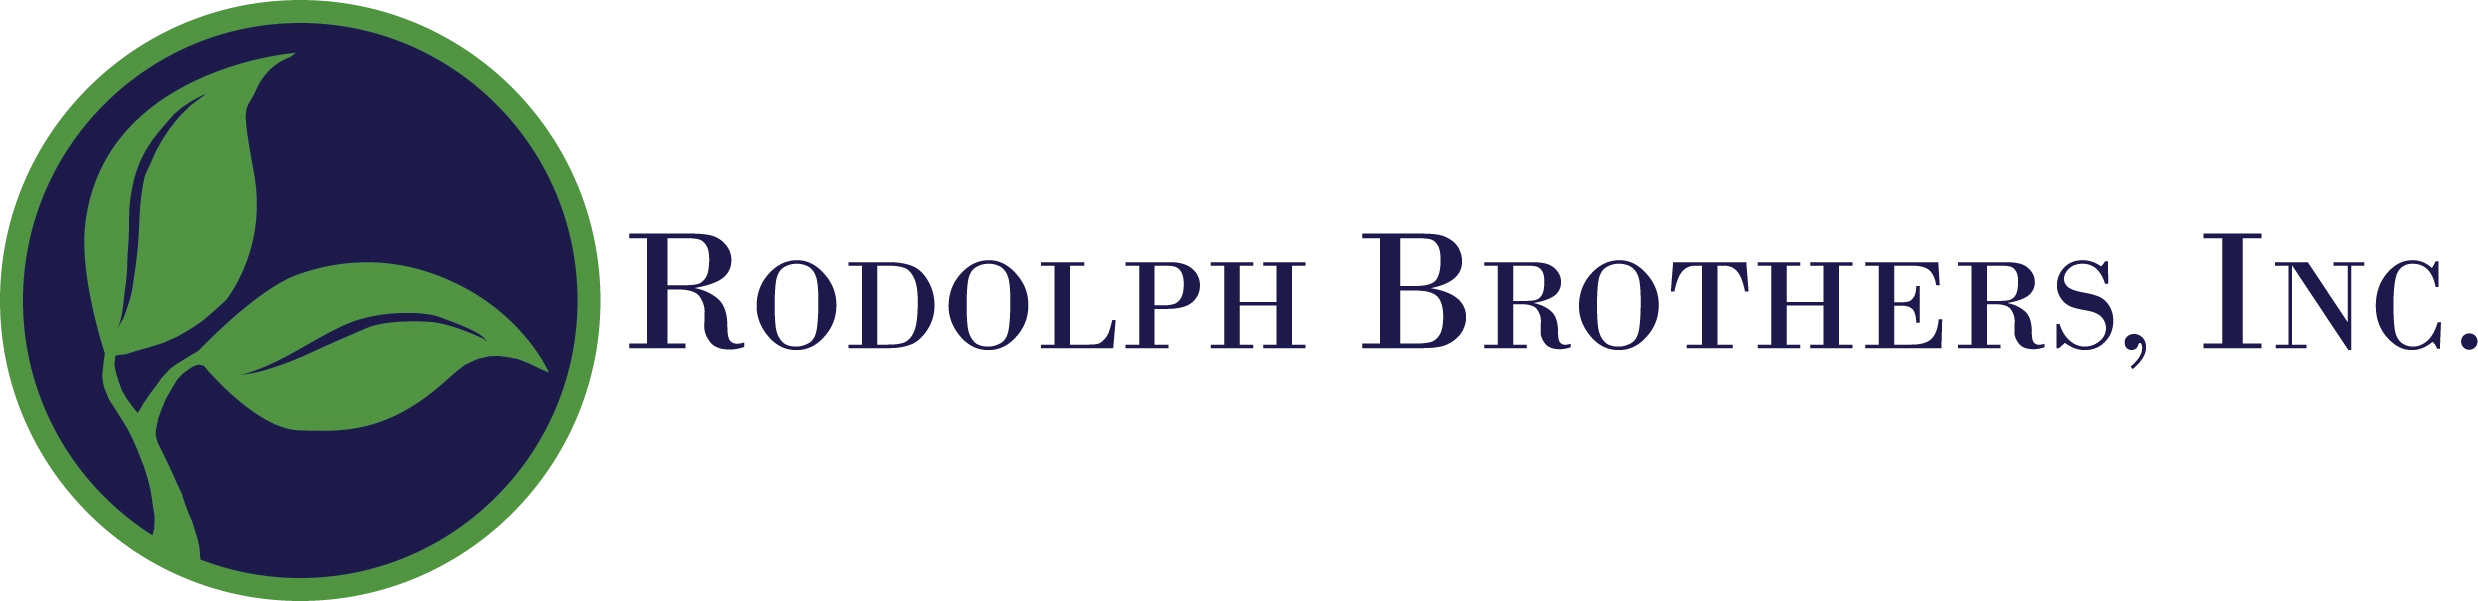 Rodolph Brothers Inc. Logo